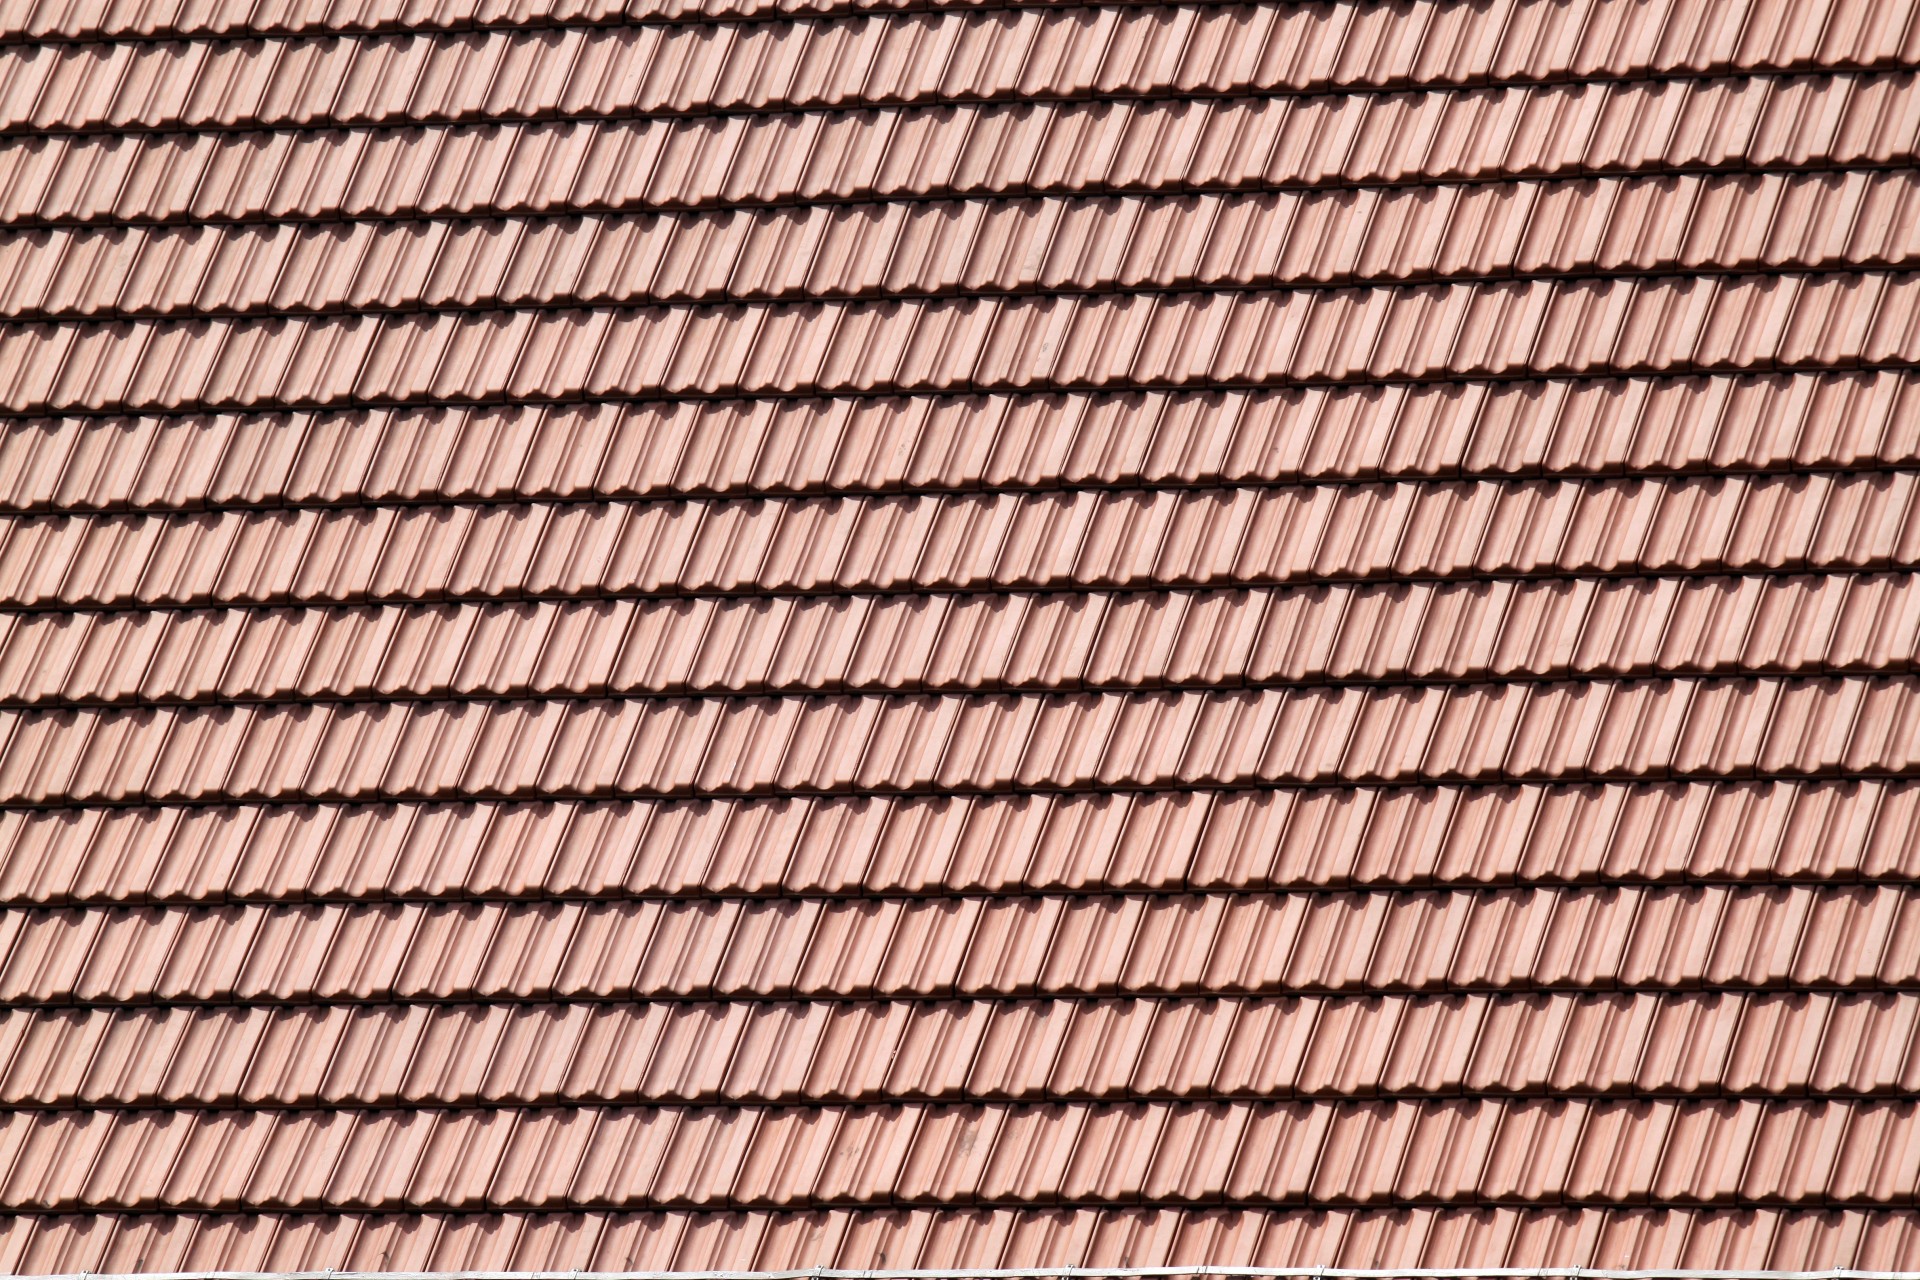 Tile Roof Background